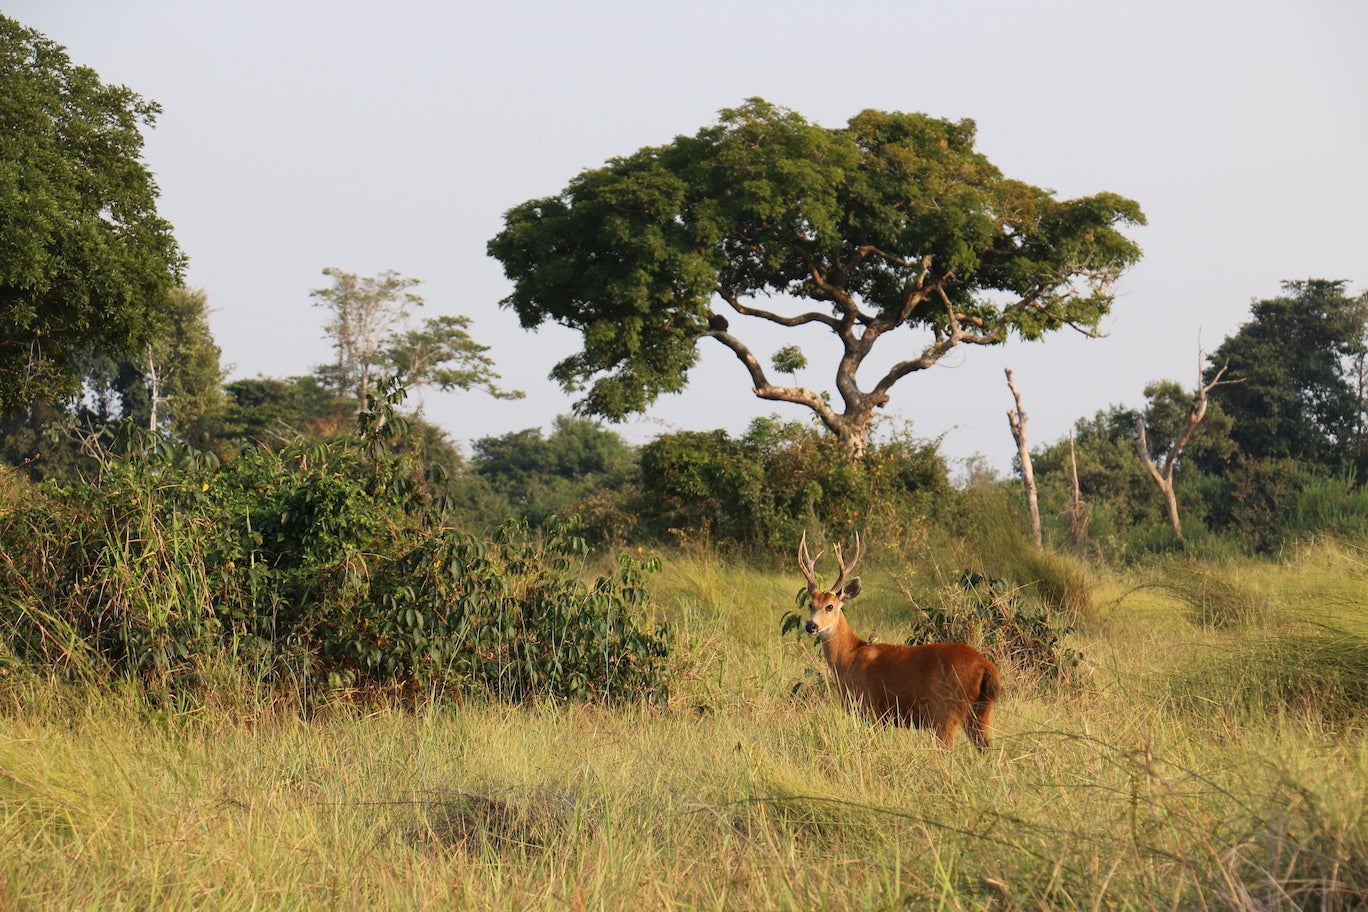 Marsh deer in savanna lining Brazilian Amazon, large tree in background